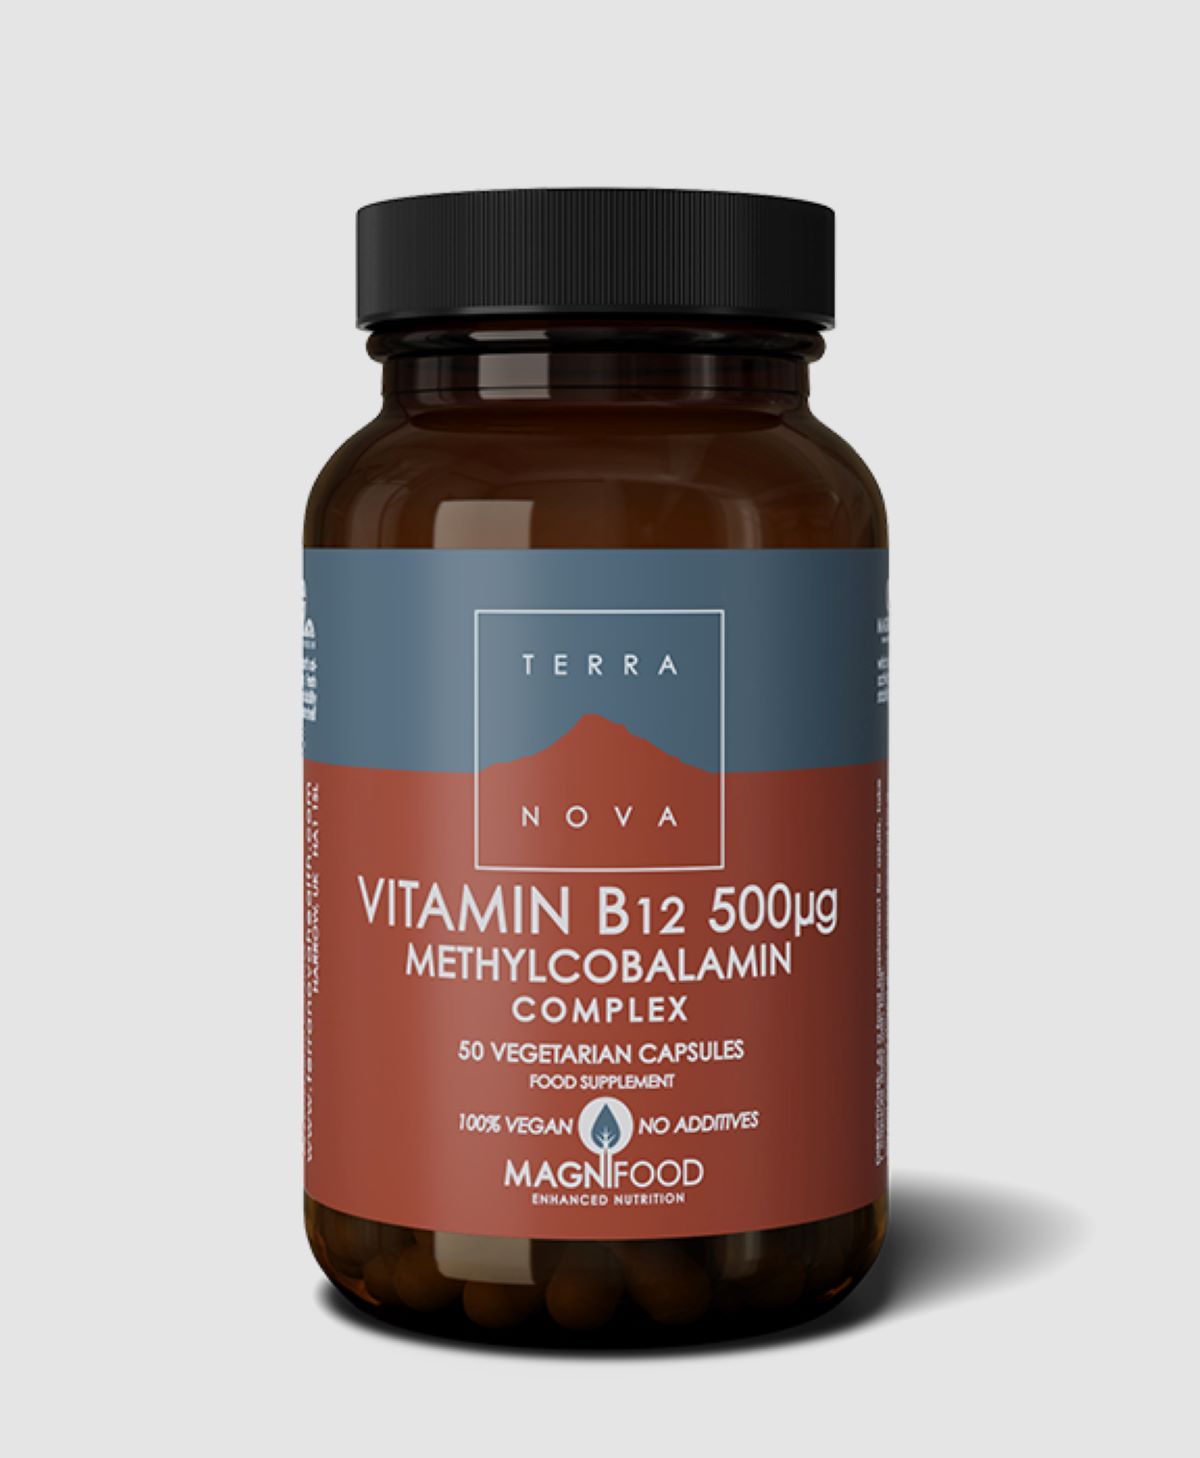 TERRANOVA Vitamin B12 500ug Complex (Methylcobalamin)